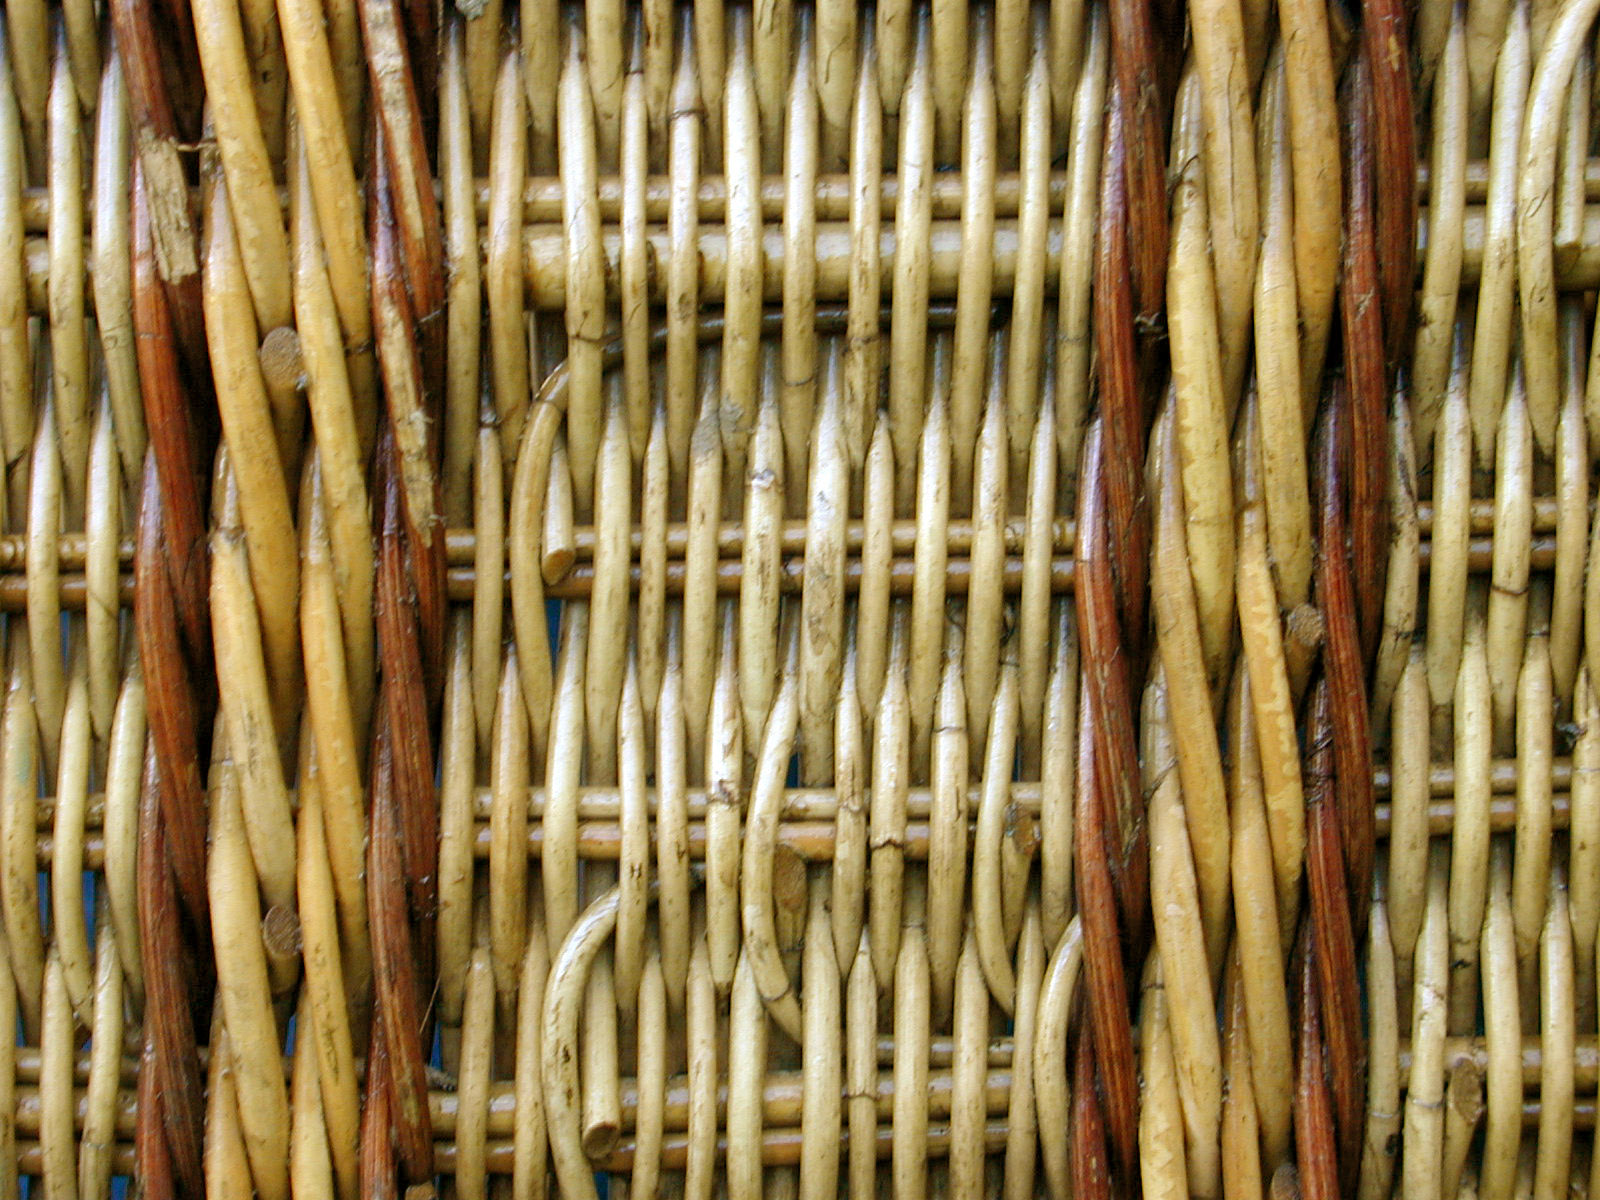 wicker basket woven wove straw straws twined intertwined brown